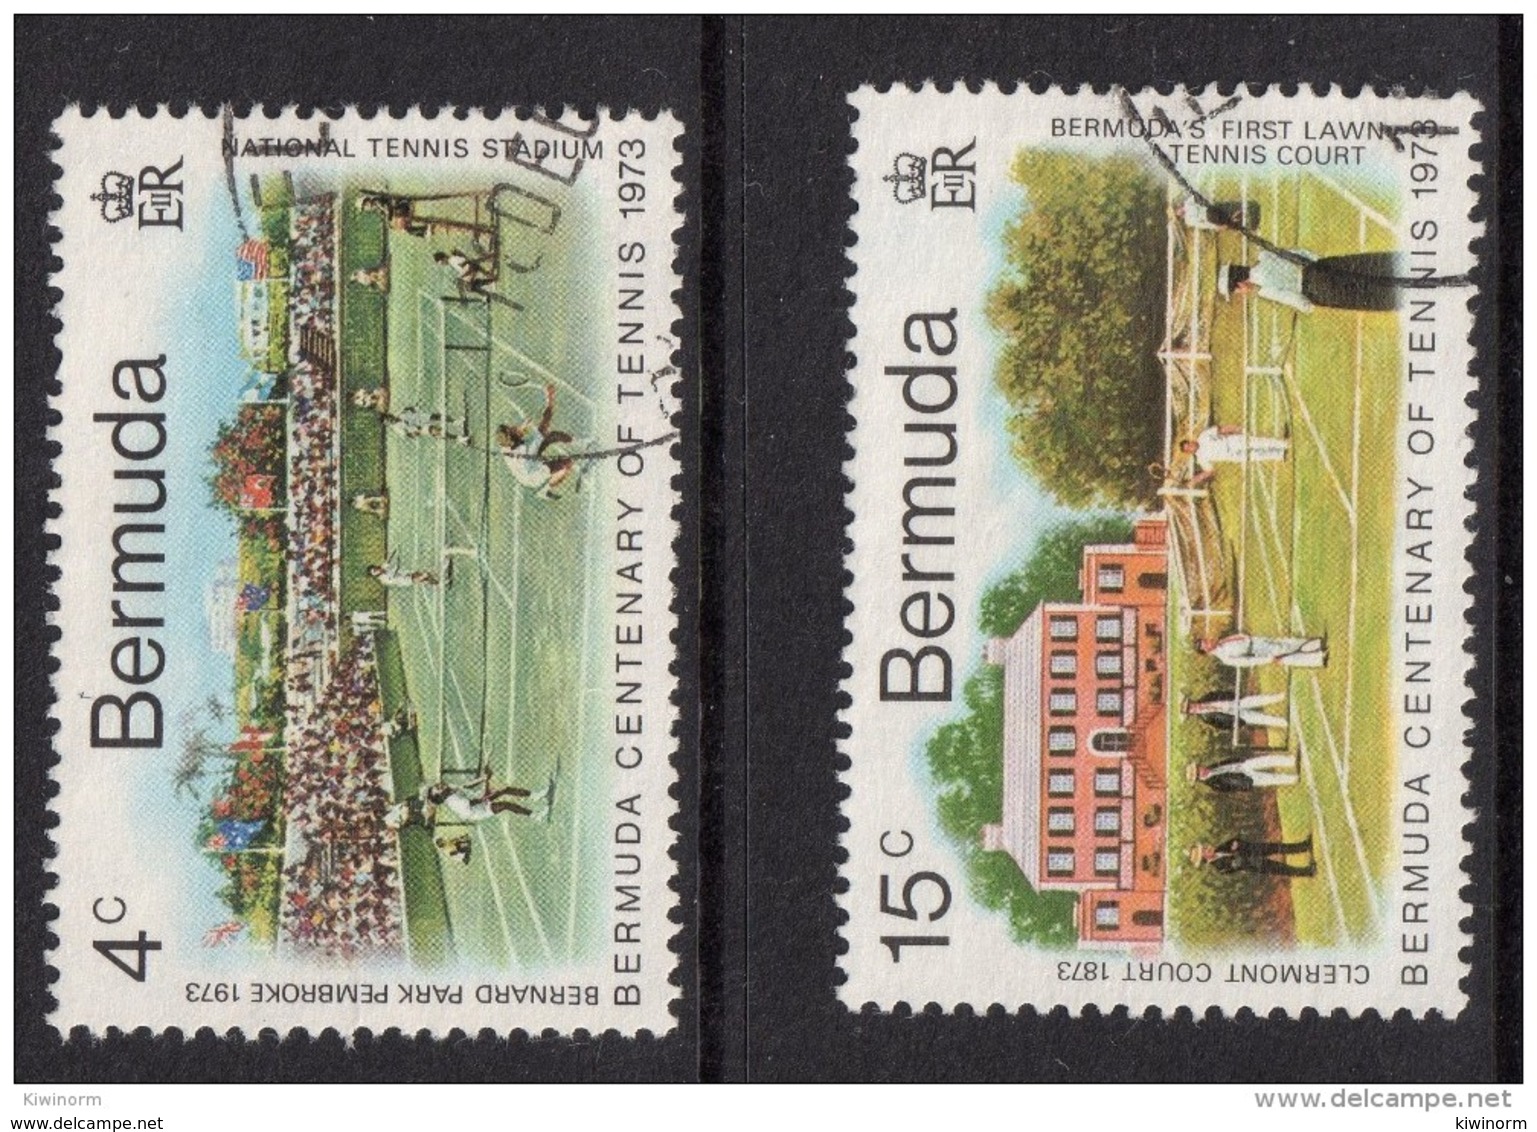 BERMUDA 1973 Tennis Values - Very Fine Used - VFU 4B685 - Bermuda